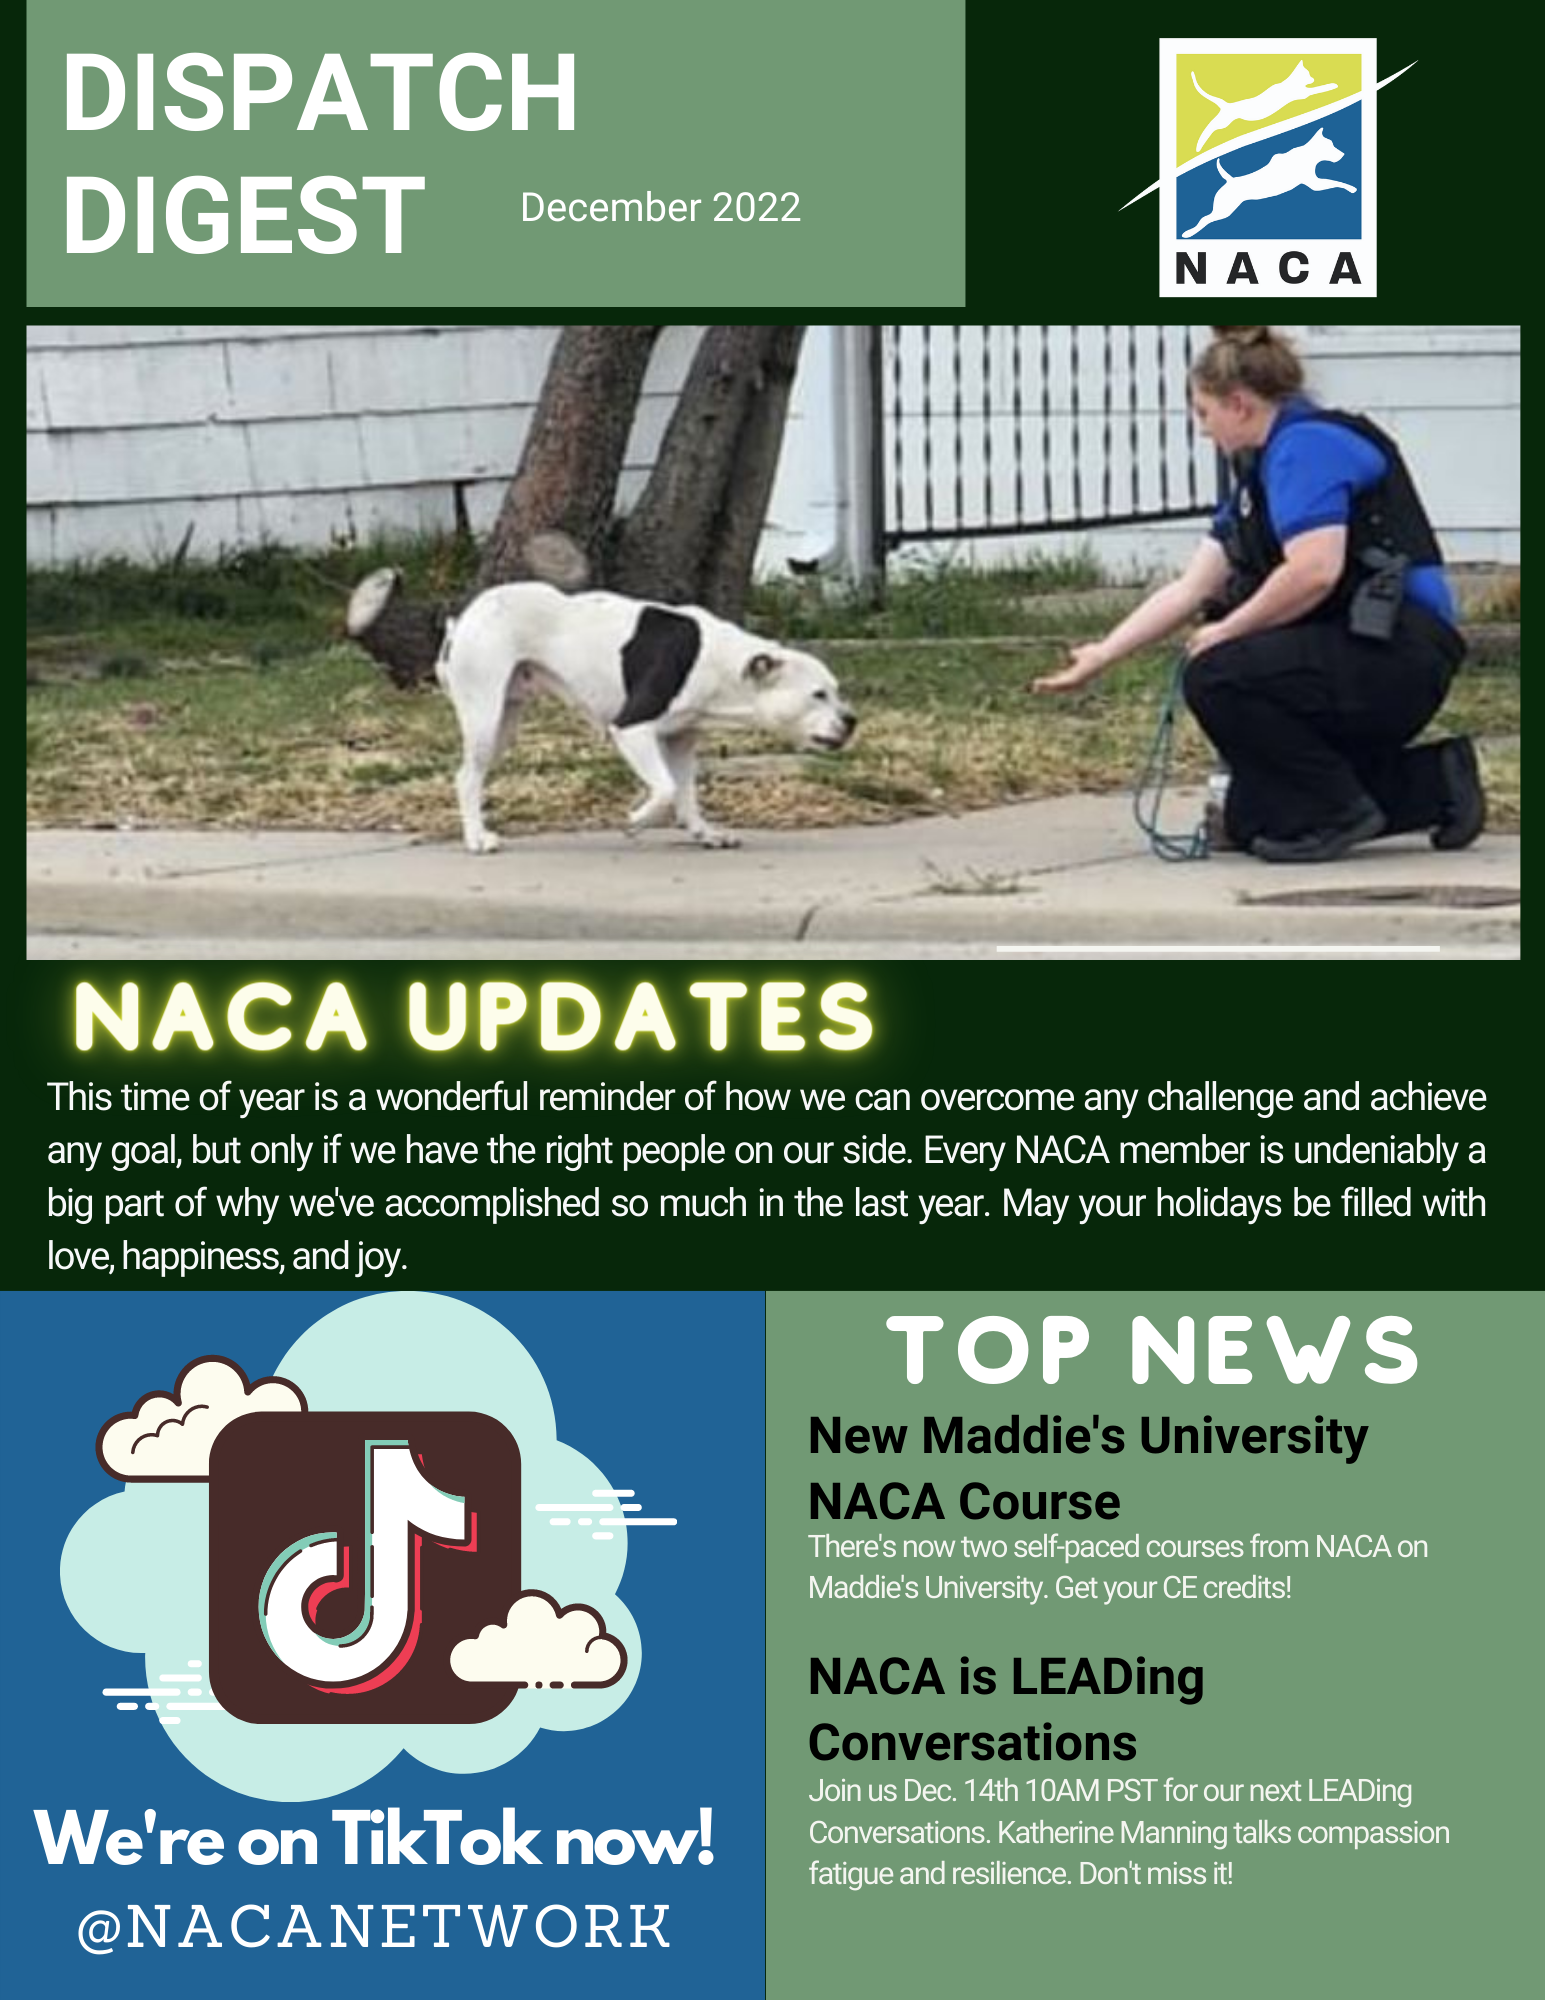 NACA Updates & Top News